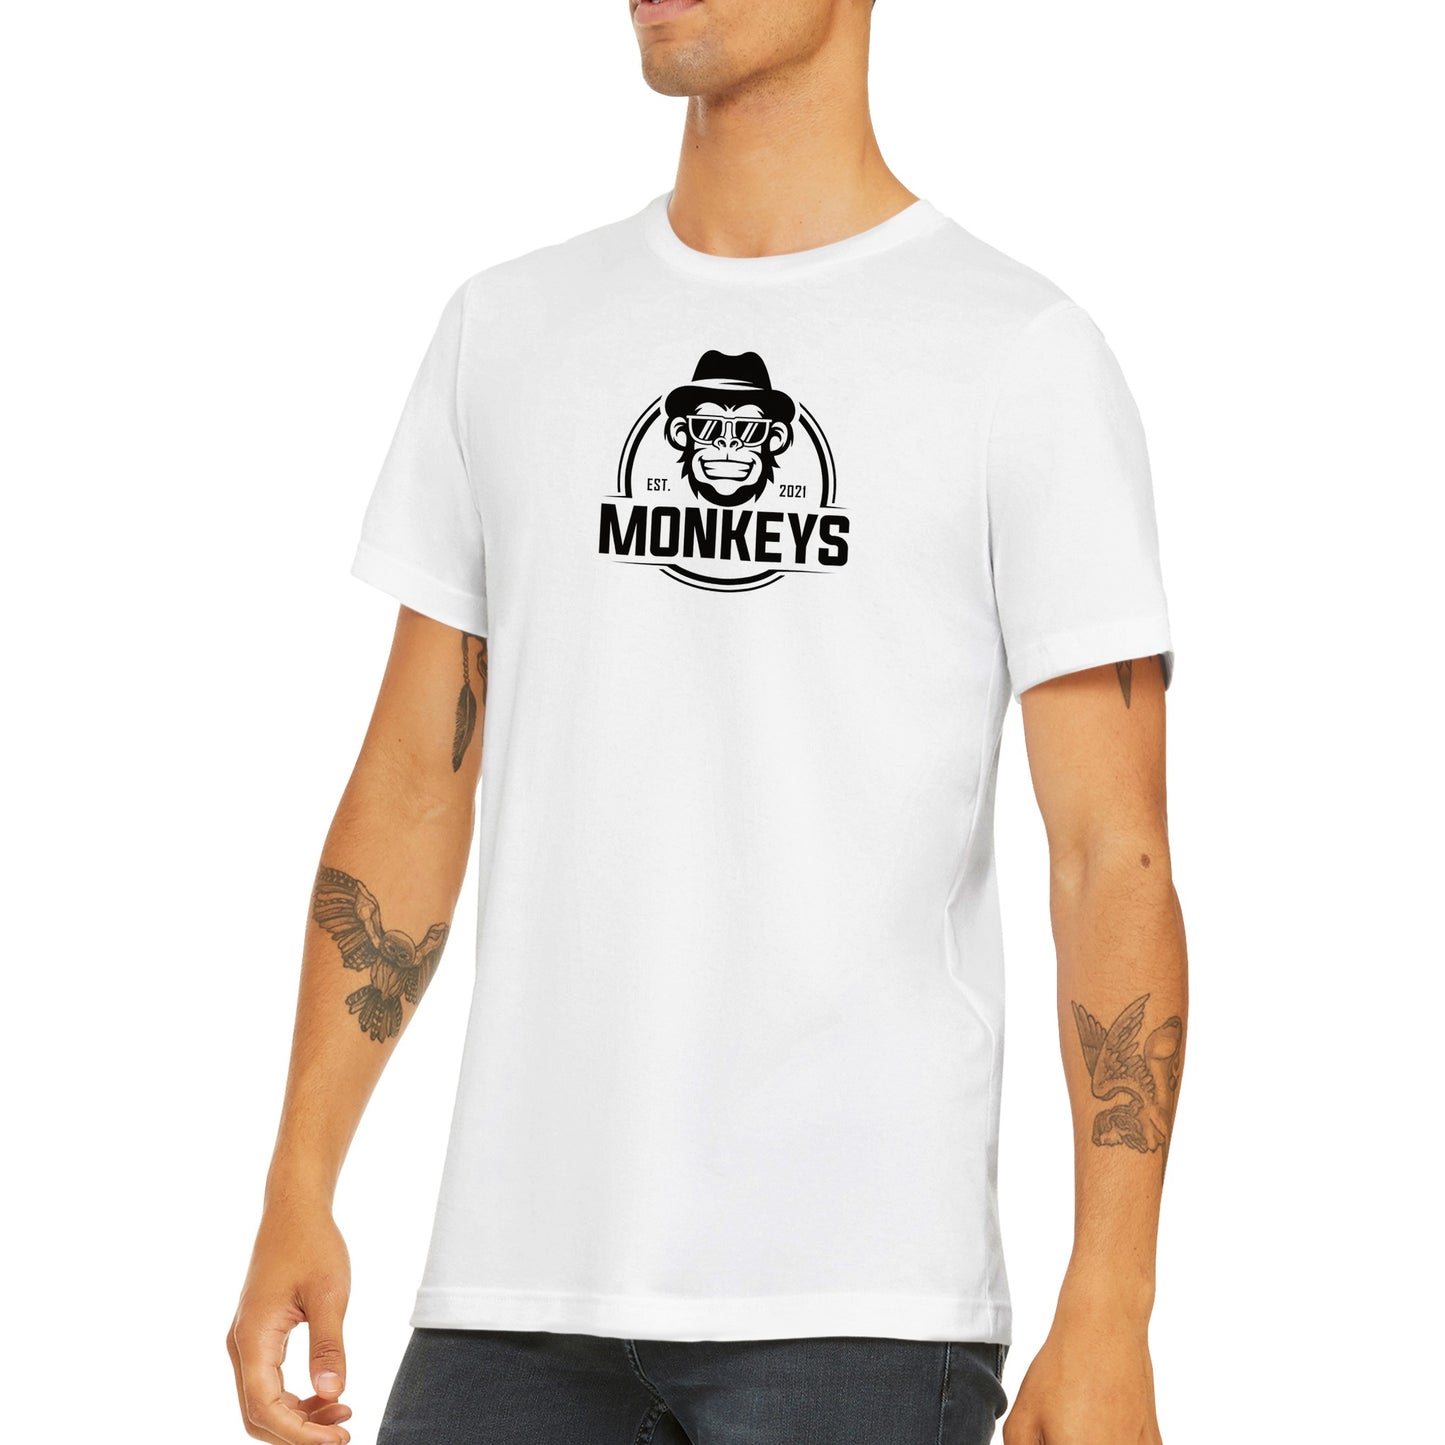 Monkeys T-shirt